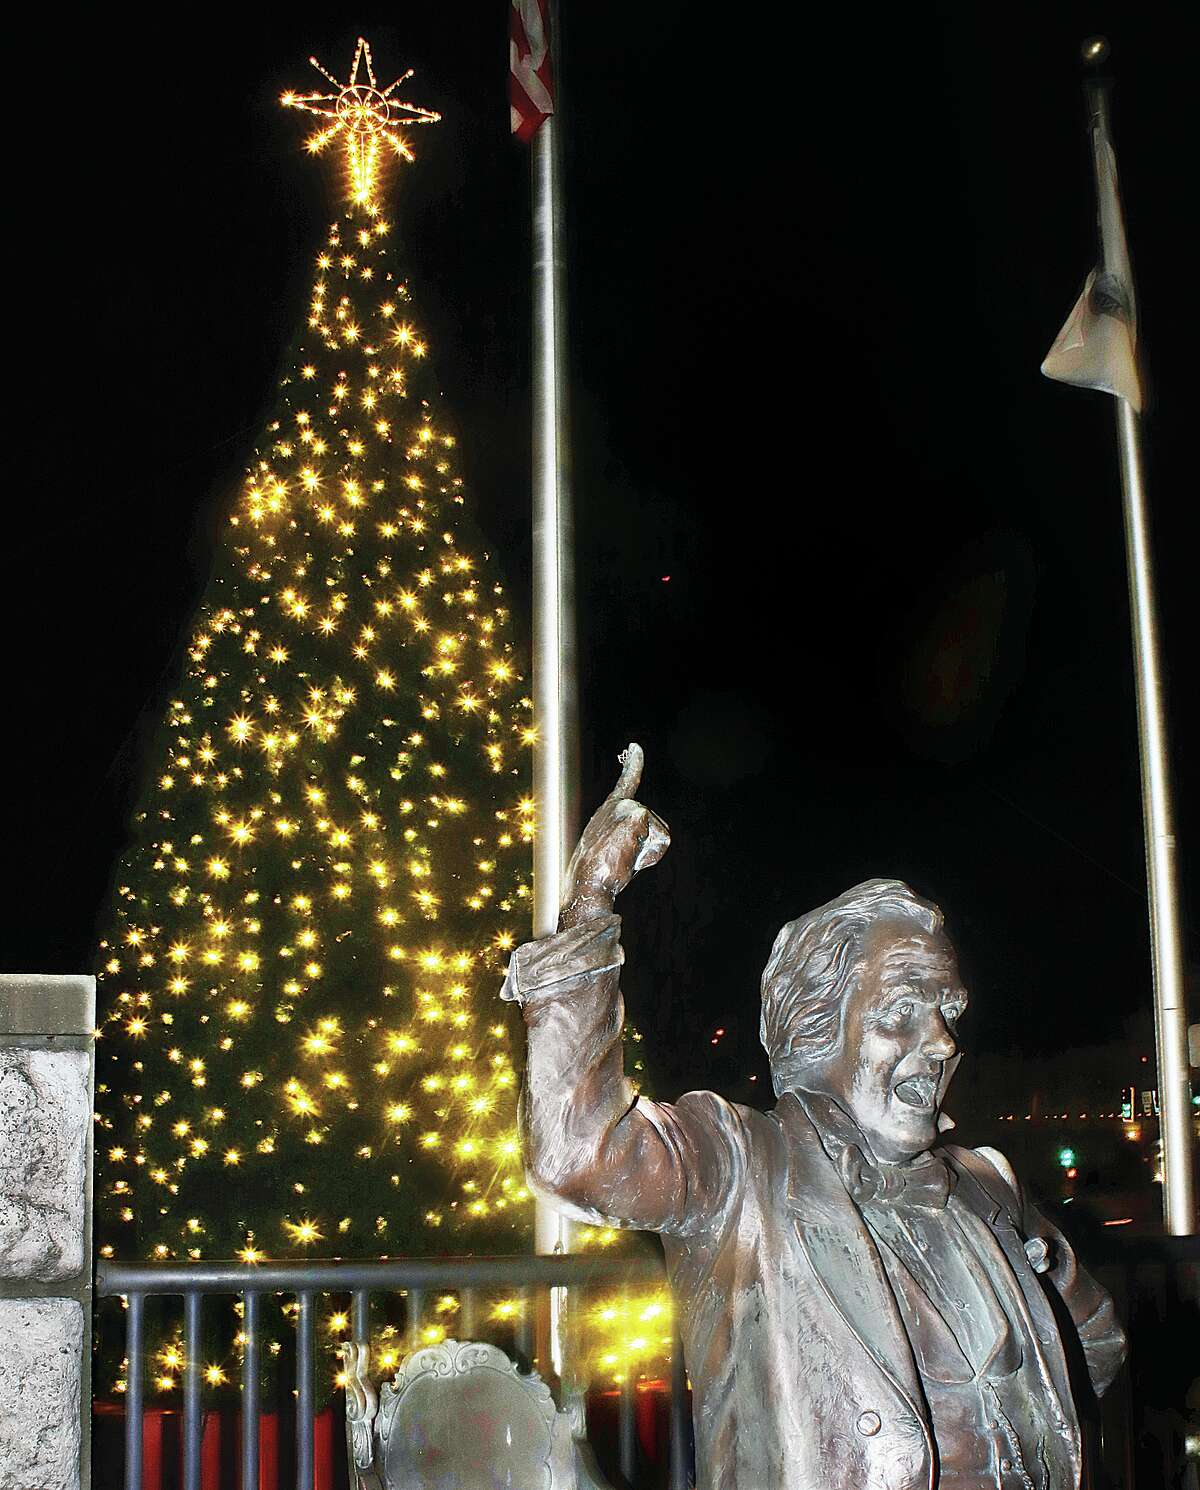 John Badman|The Telegraph The statue of Stephen A. Douglas seemed to proclaim the new Christmas tree lit Friday night in Alton.